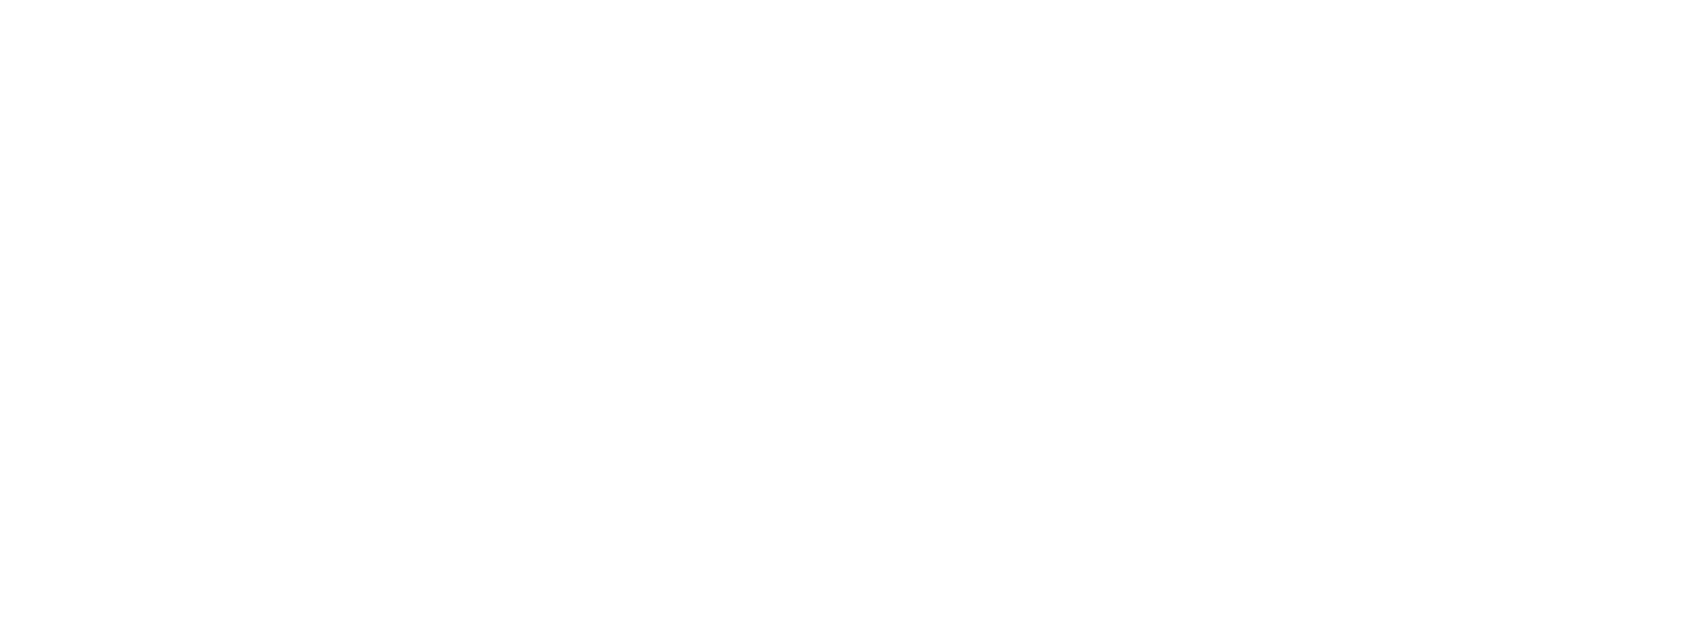 Insurance-Innovators-Nordics_RGB-logo-copy-6